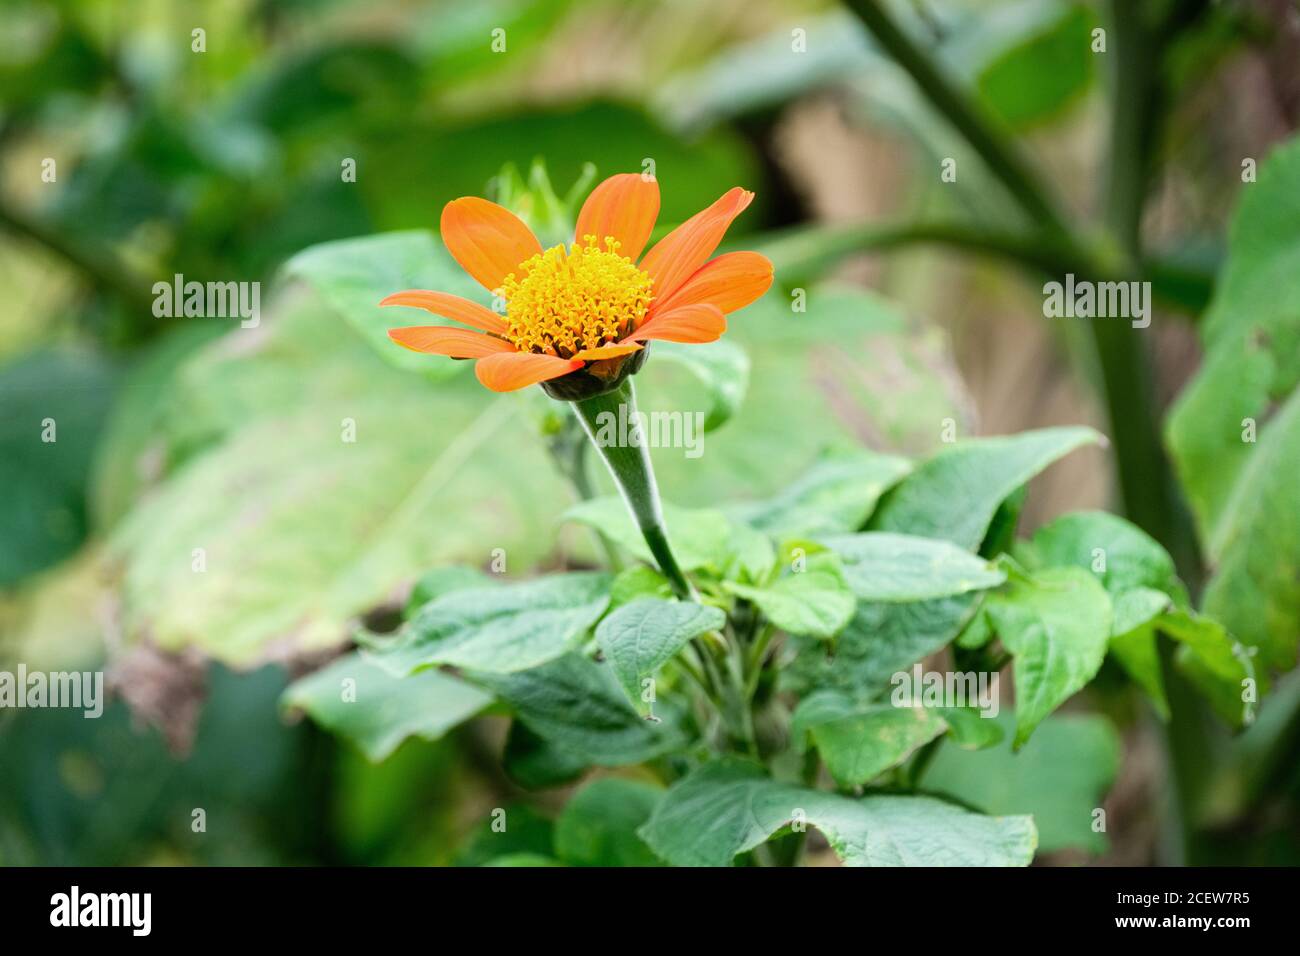 Daisy-like orange flower-heads of Tithonia rotundifolia 'Torch'. Mexican sunflower 'Torch' Stock Photo